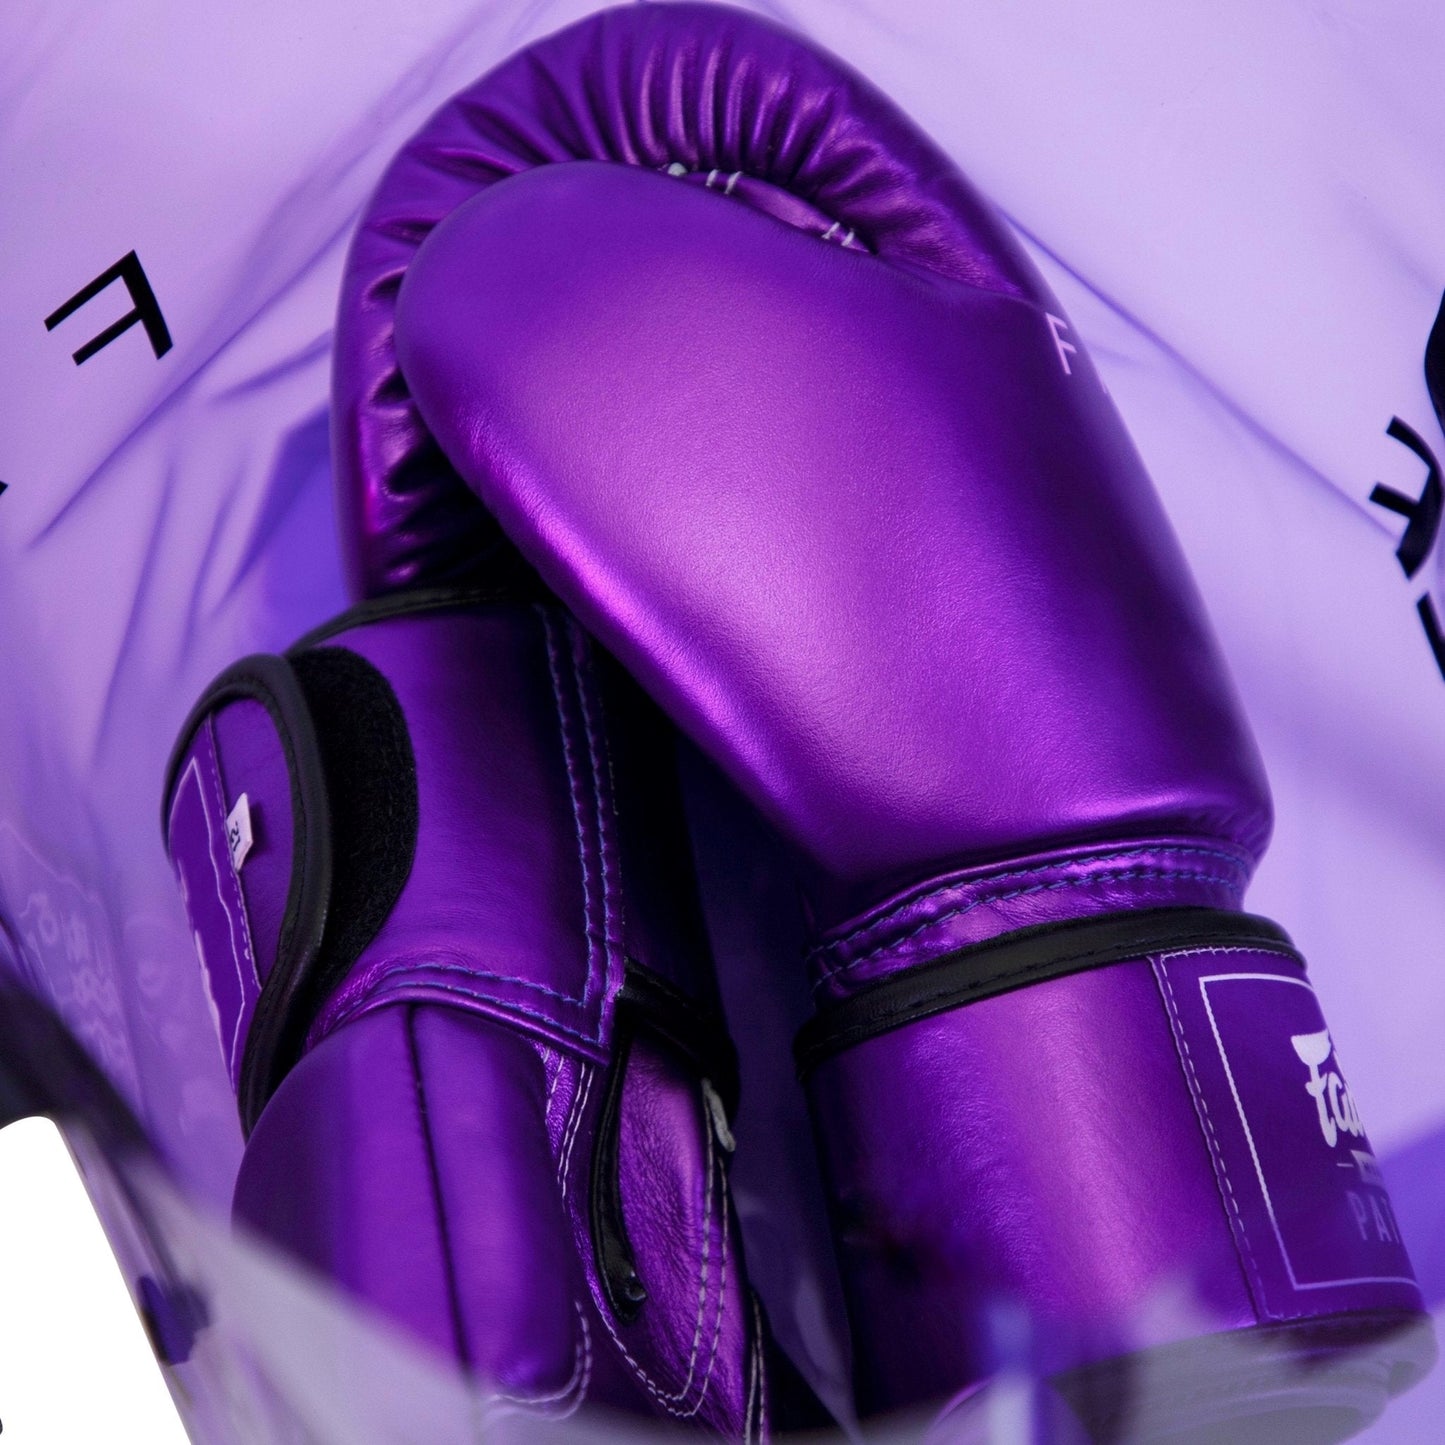 FAIRTEX Boxing Gloves BGV22 METALLIC PURPLE